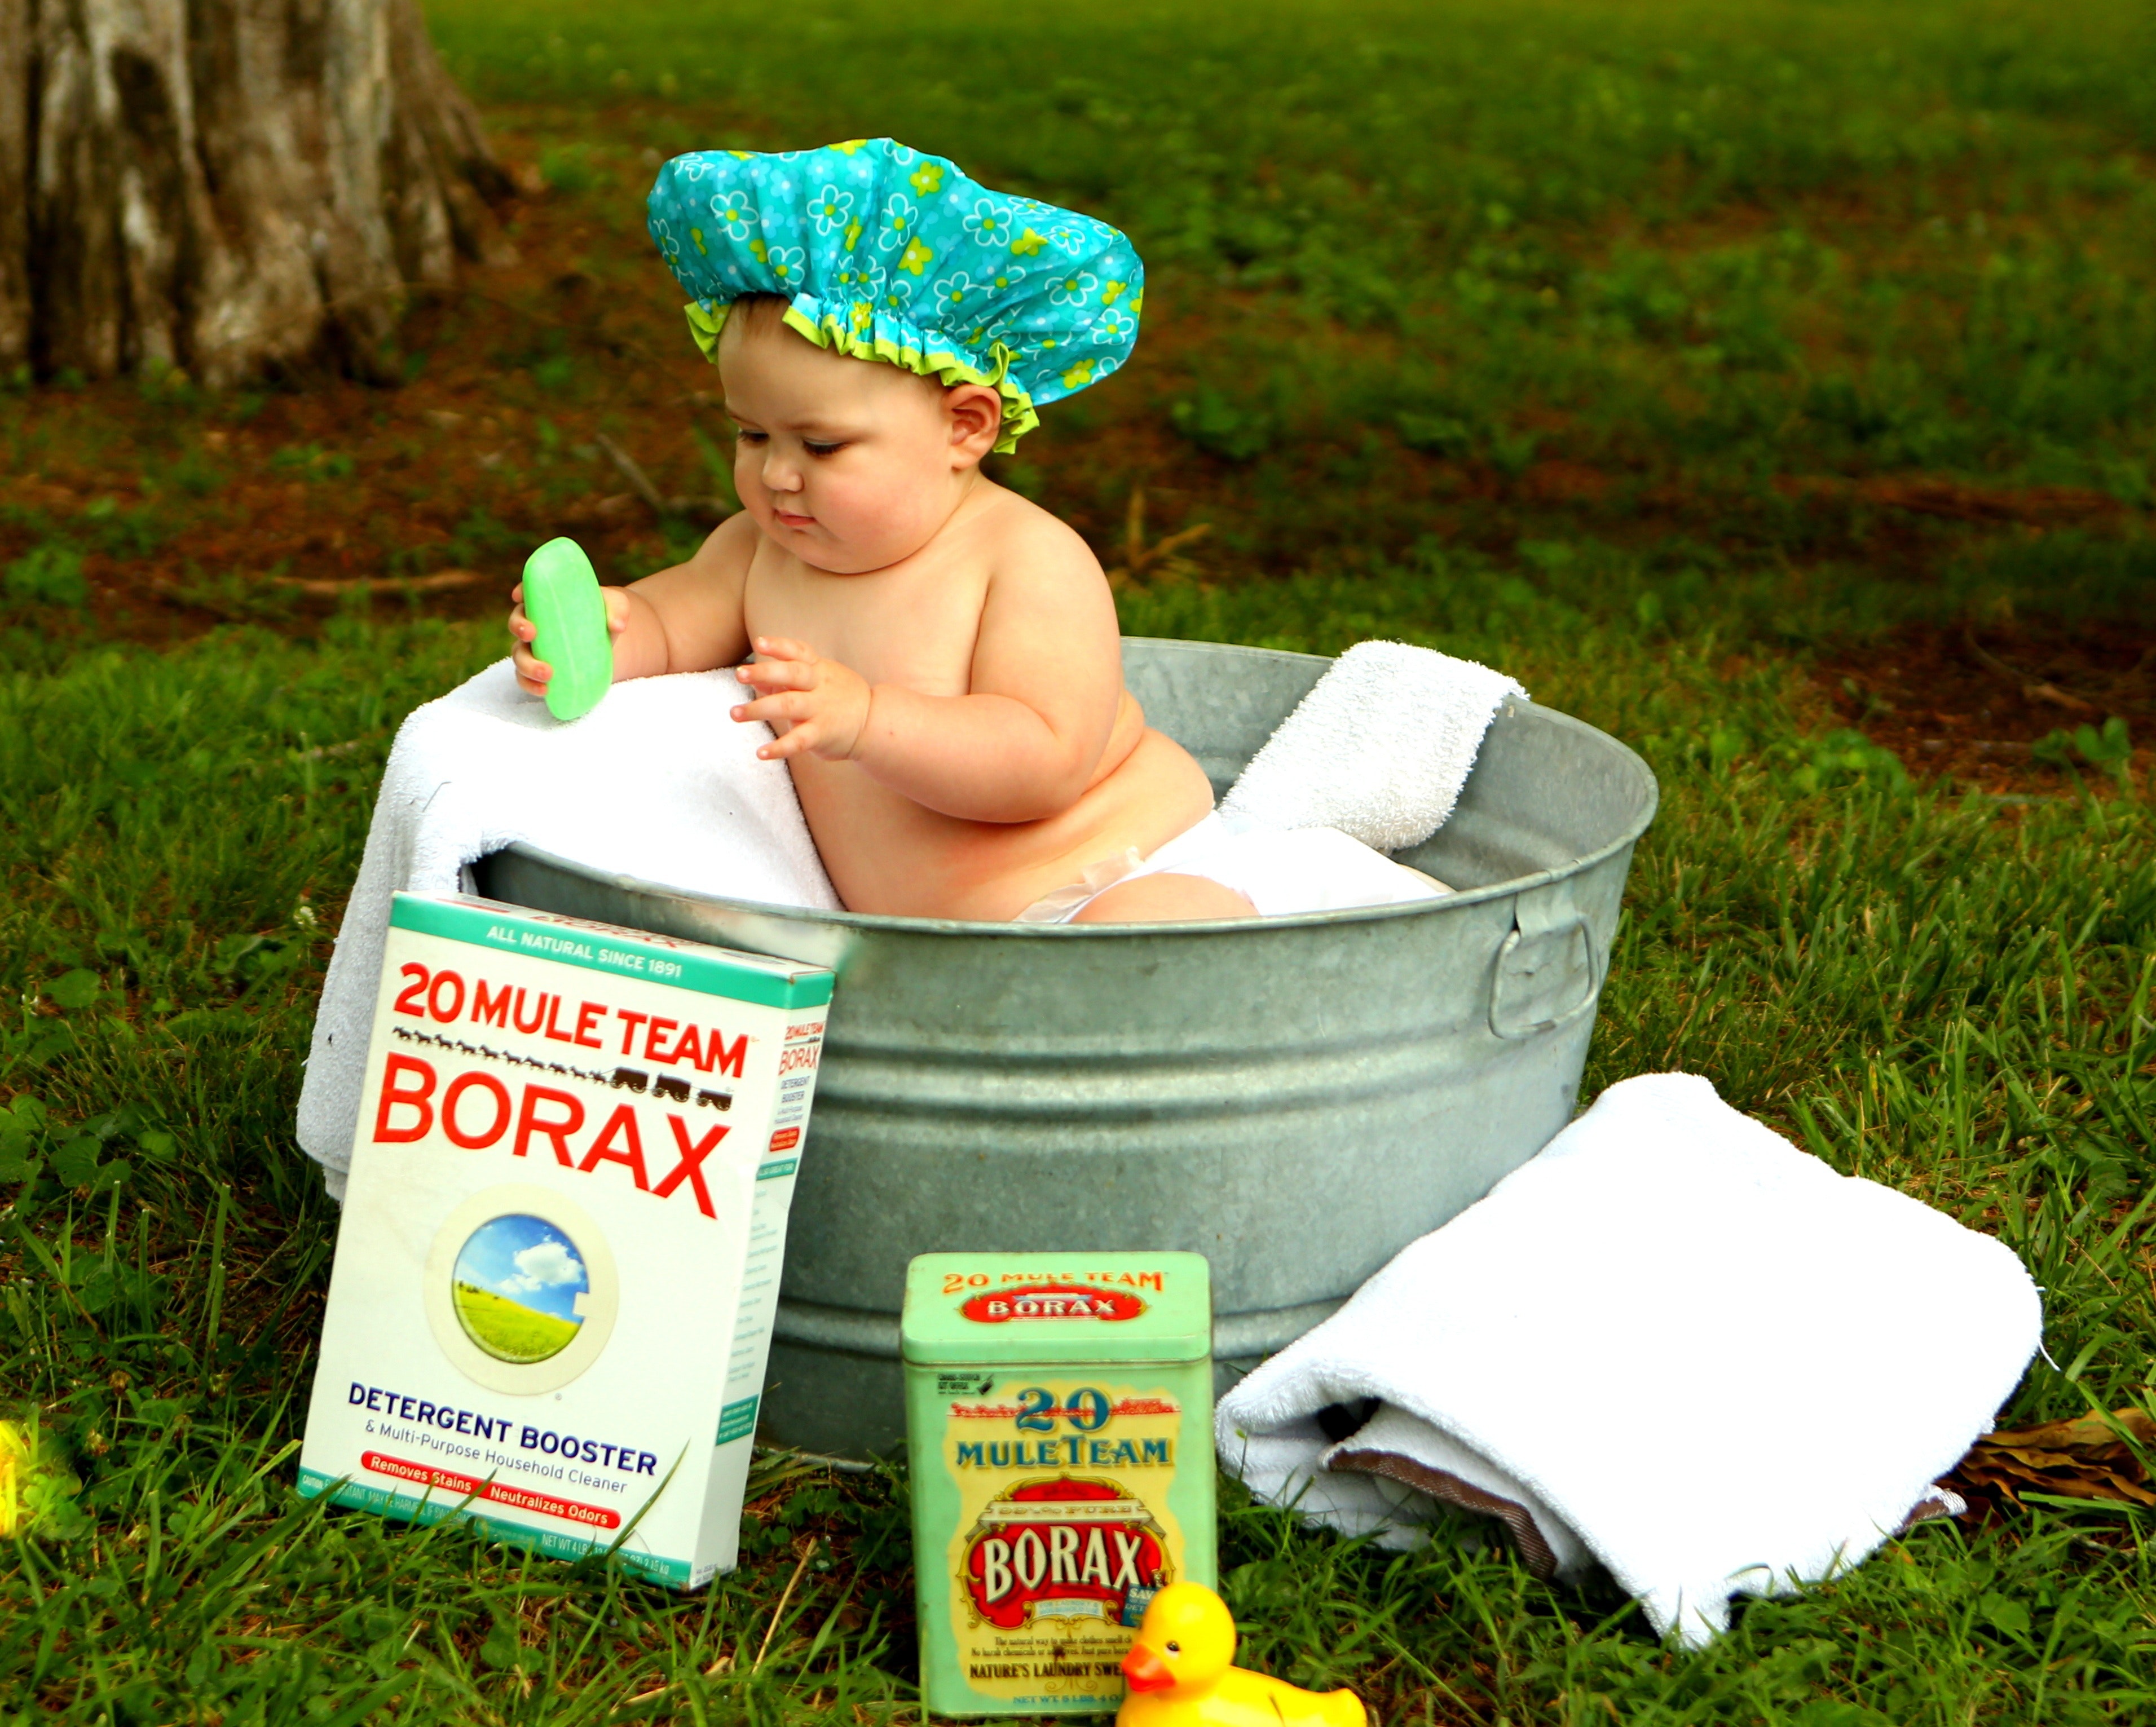 Shirtless baby boy in galvanized tub photo